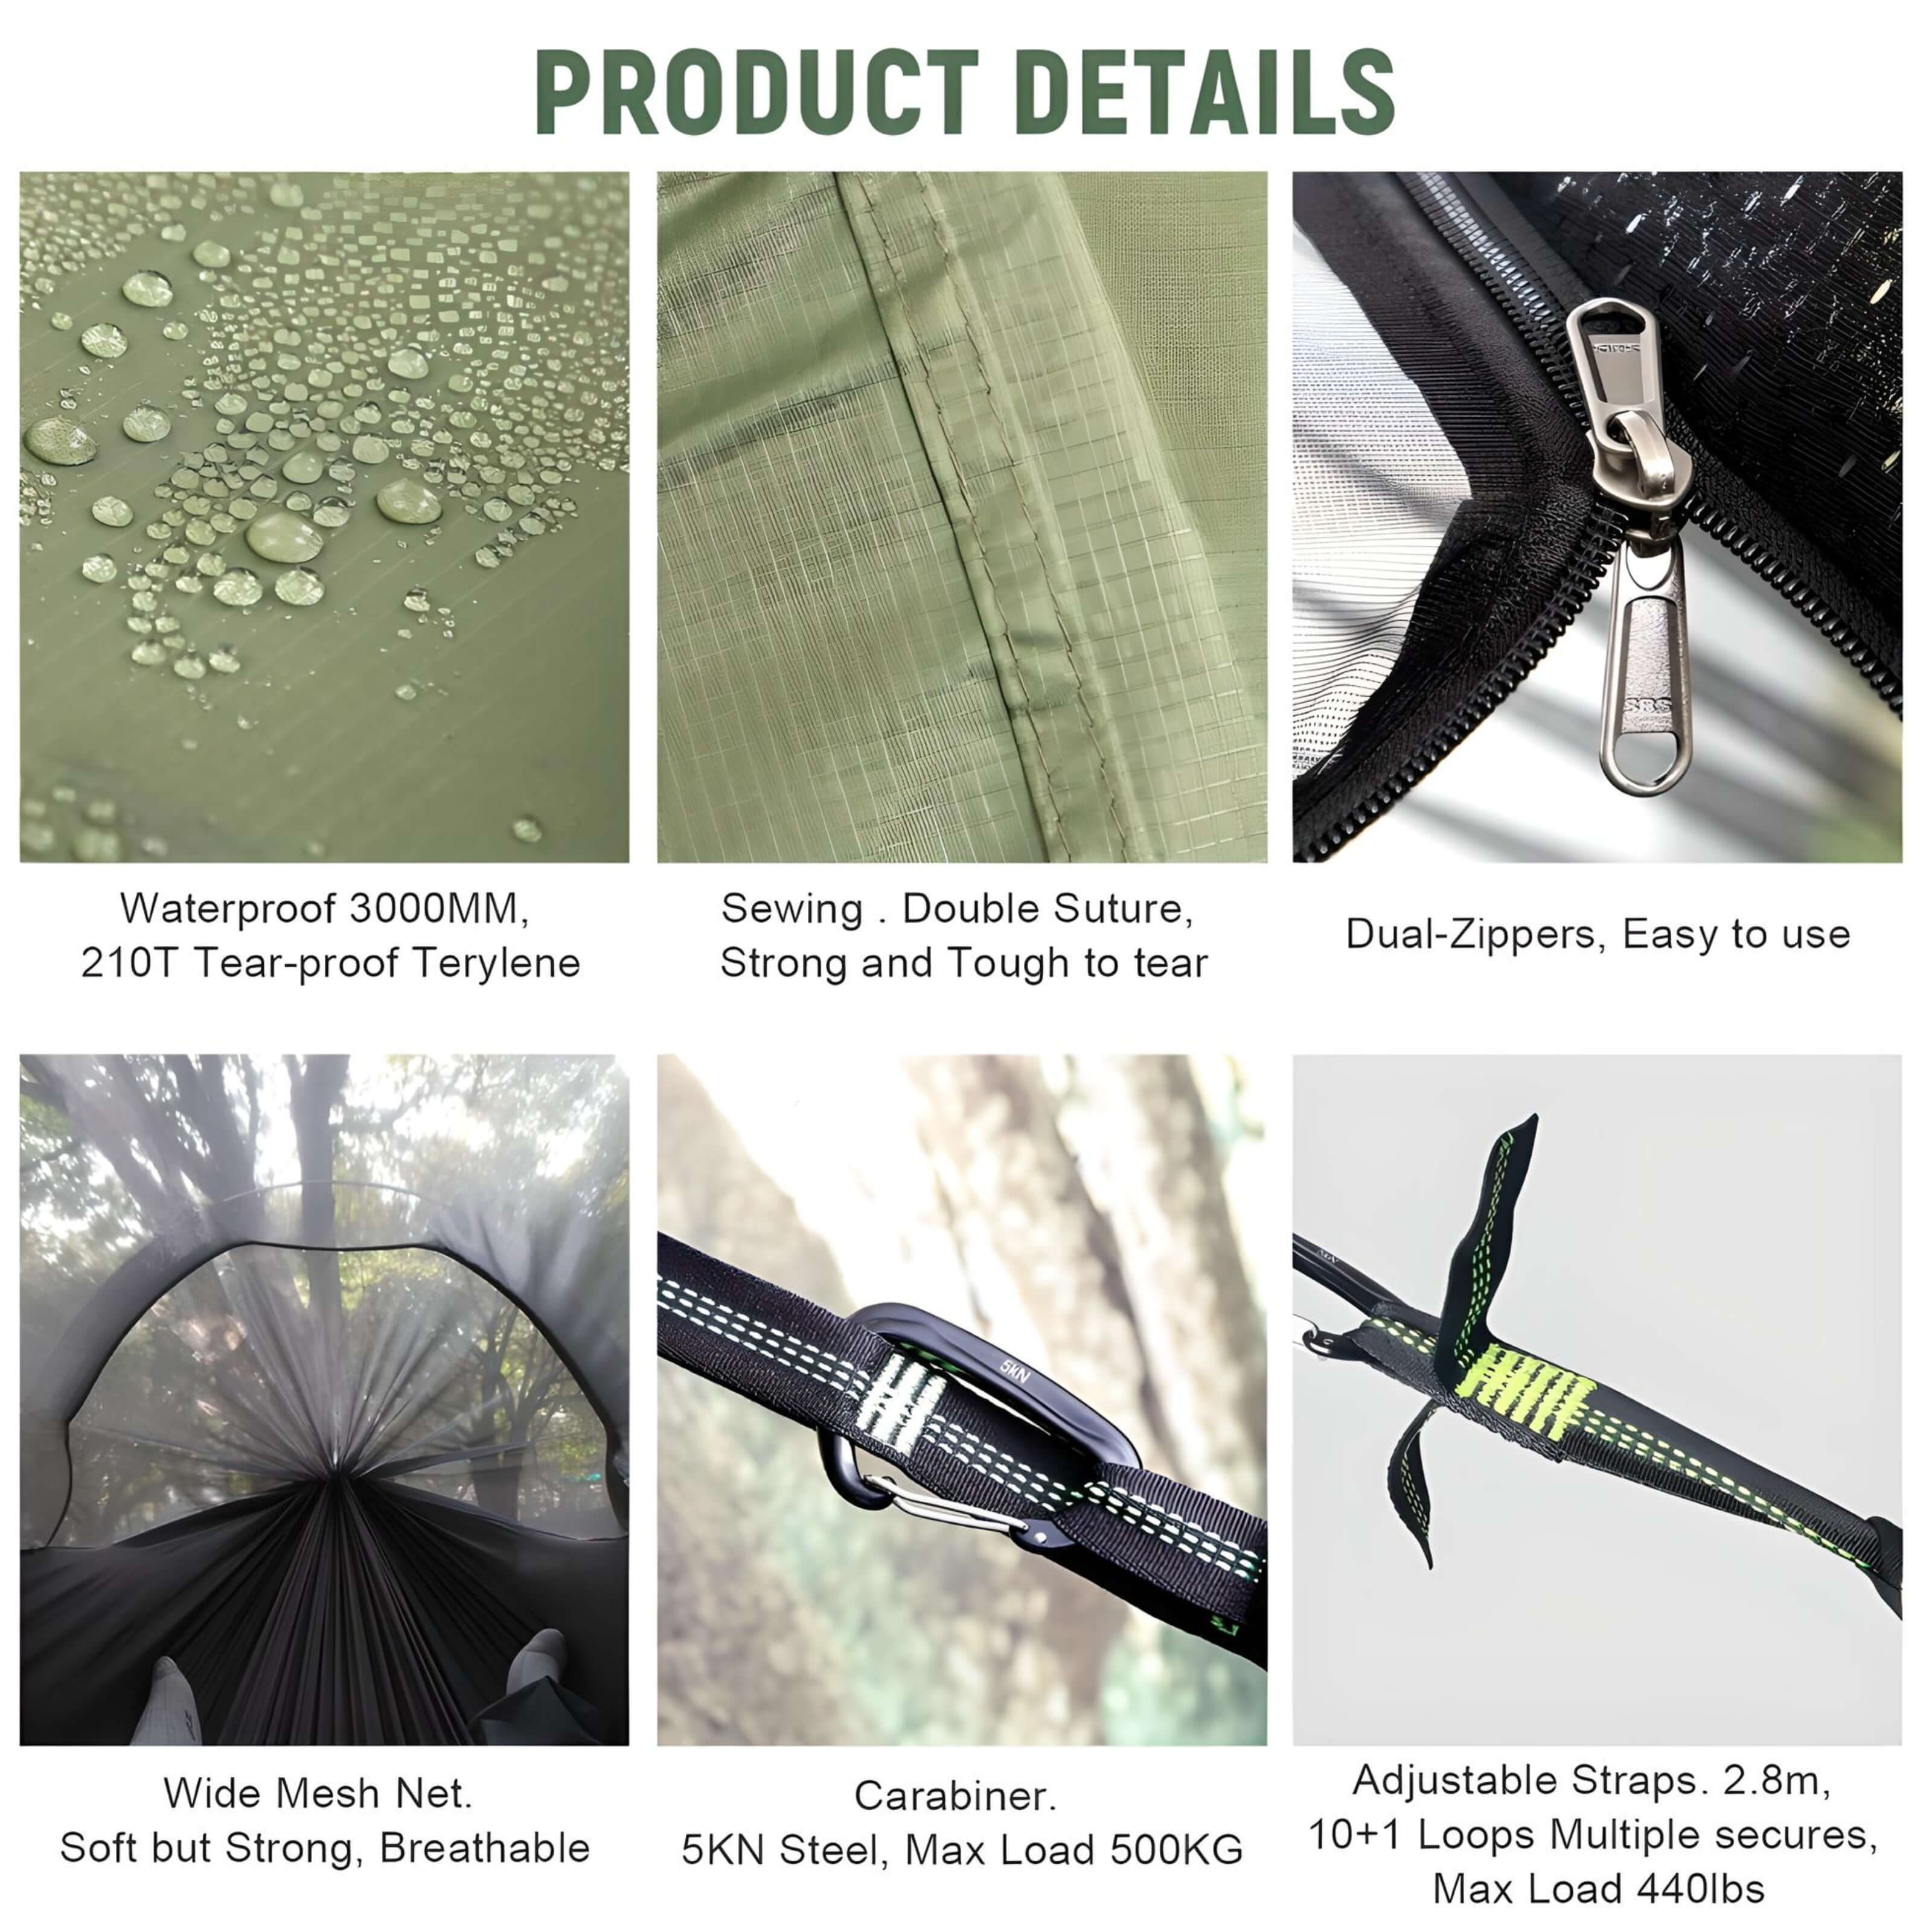 waterproof-hammock-tent-product-details